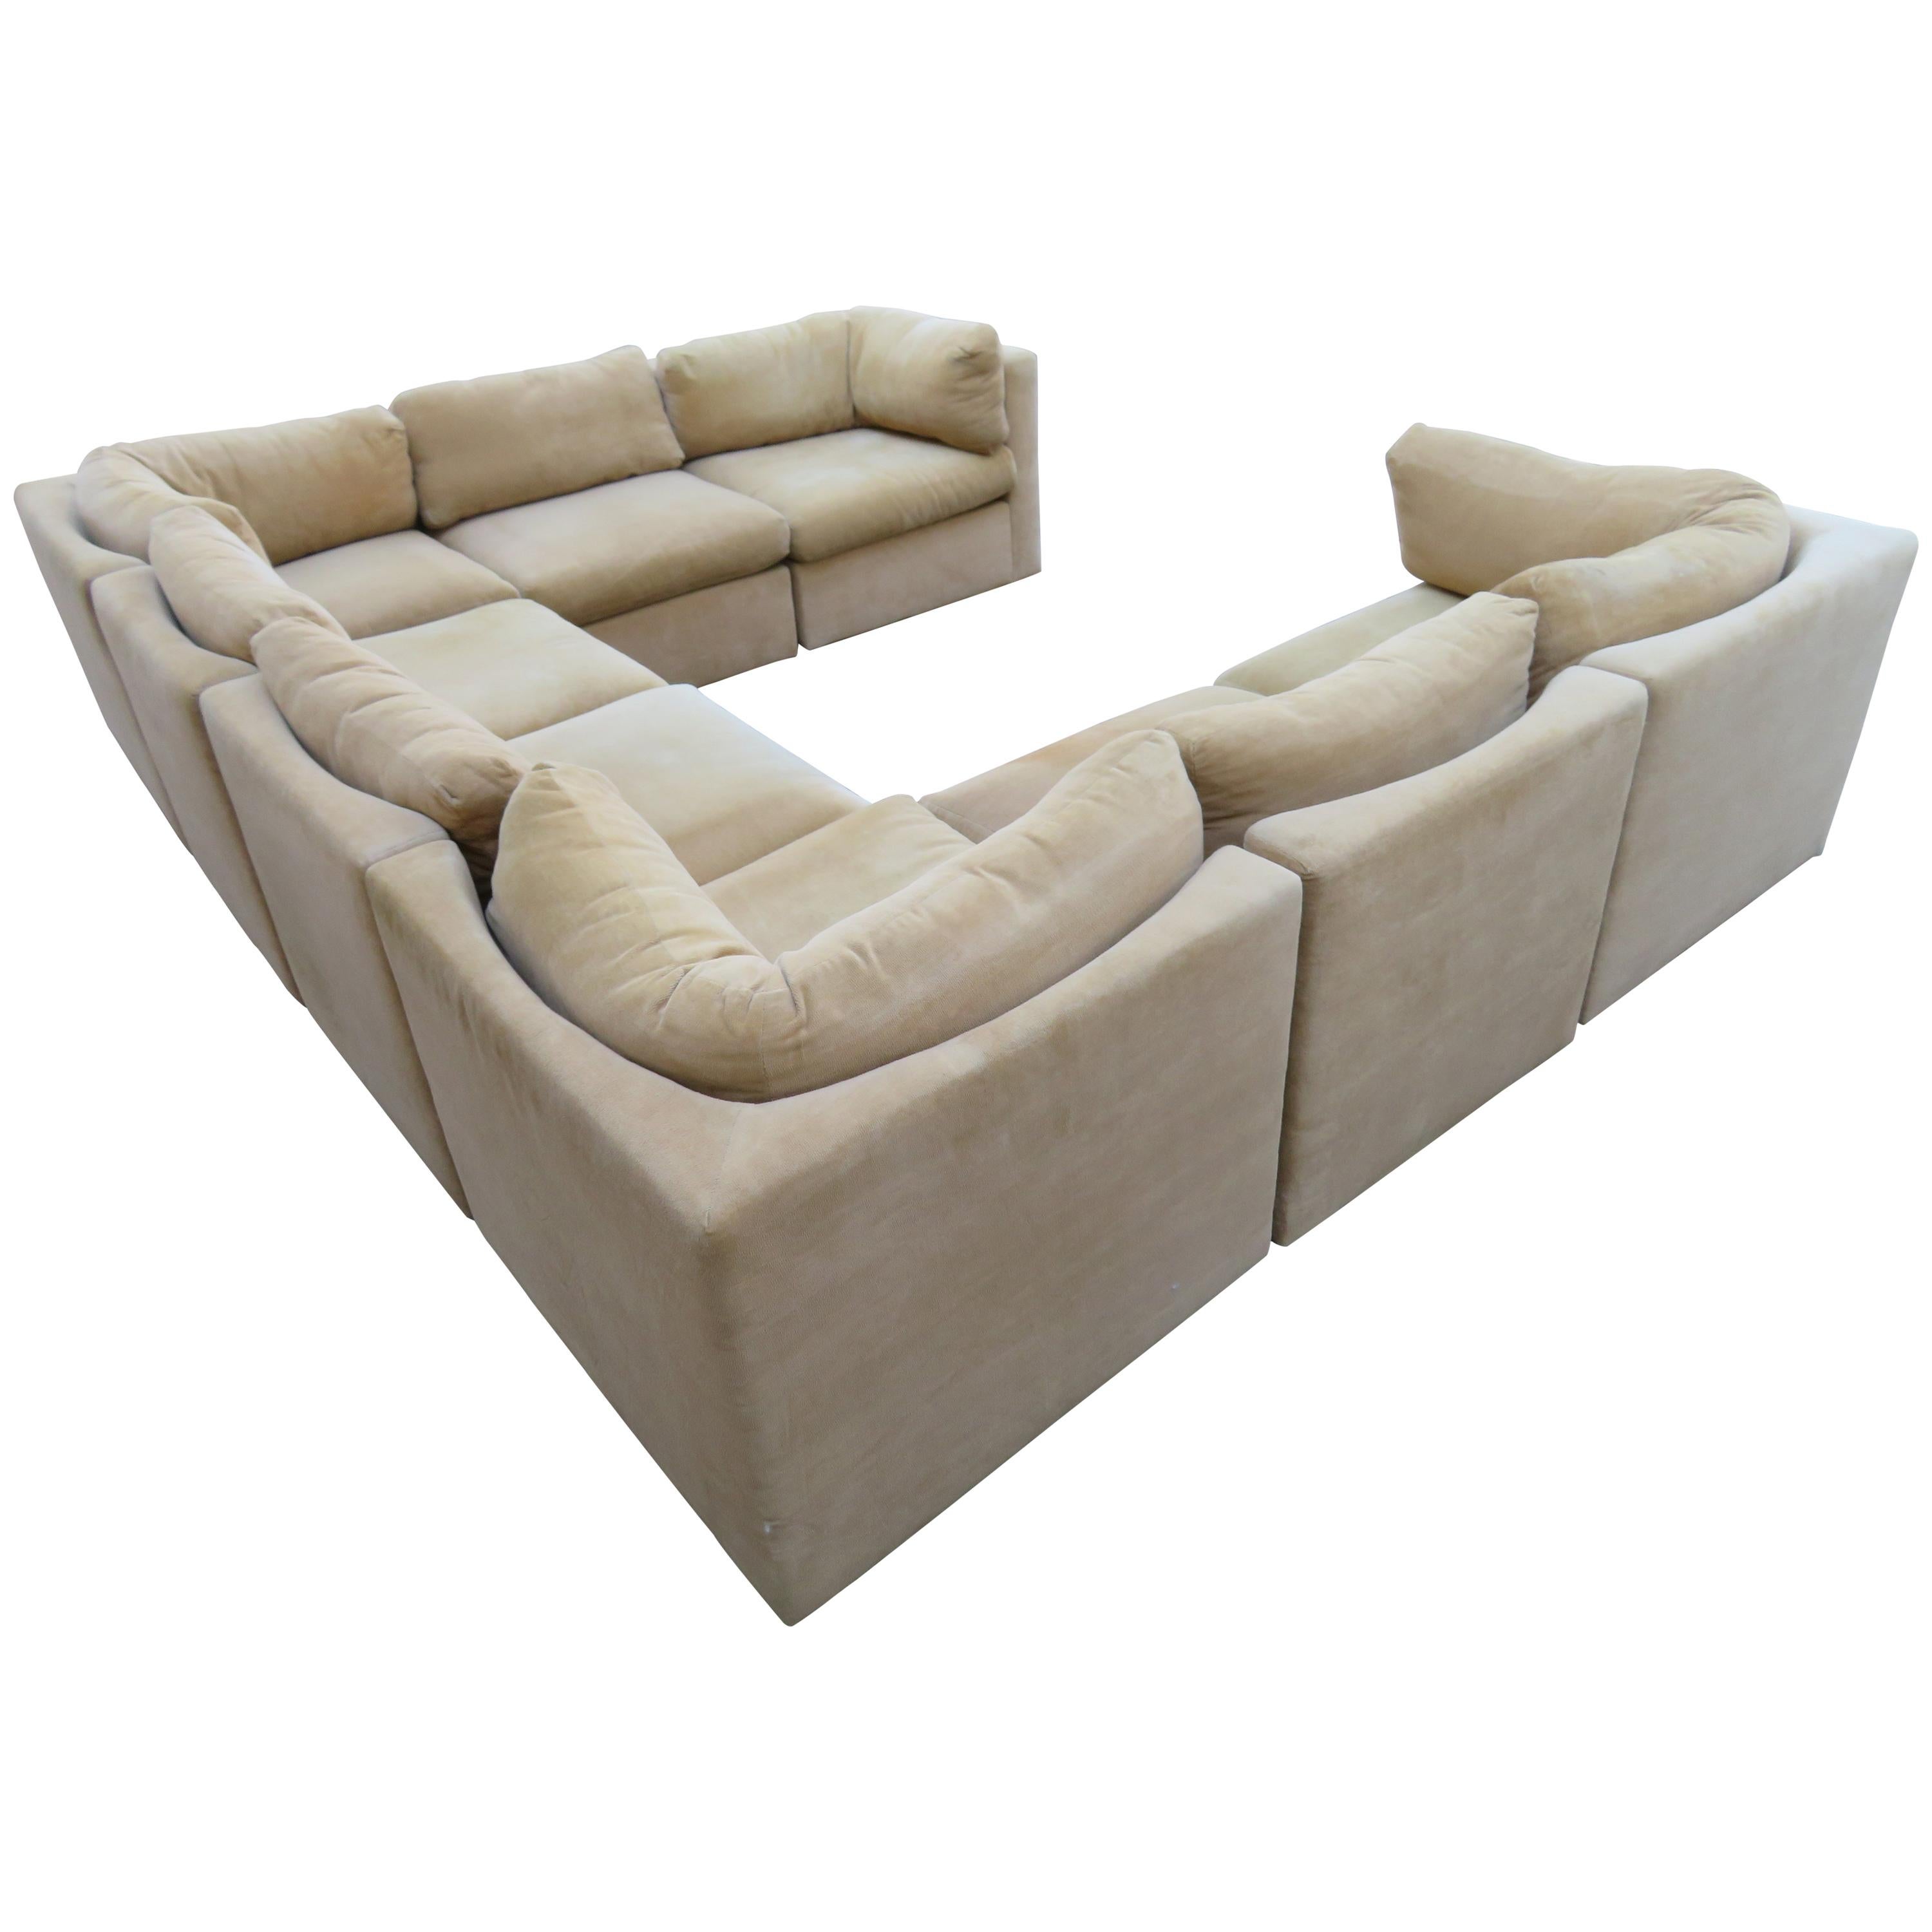 Wonderful 8 Piece Milo Baughman Curved Seat Sectional Sofa Mid-Century Modern